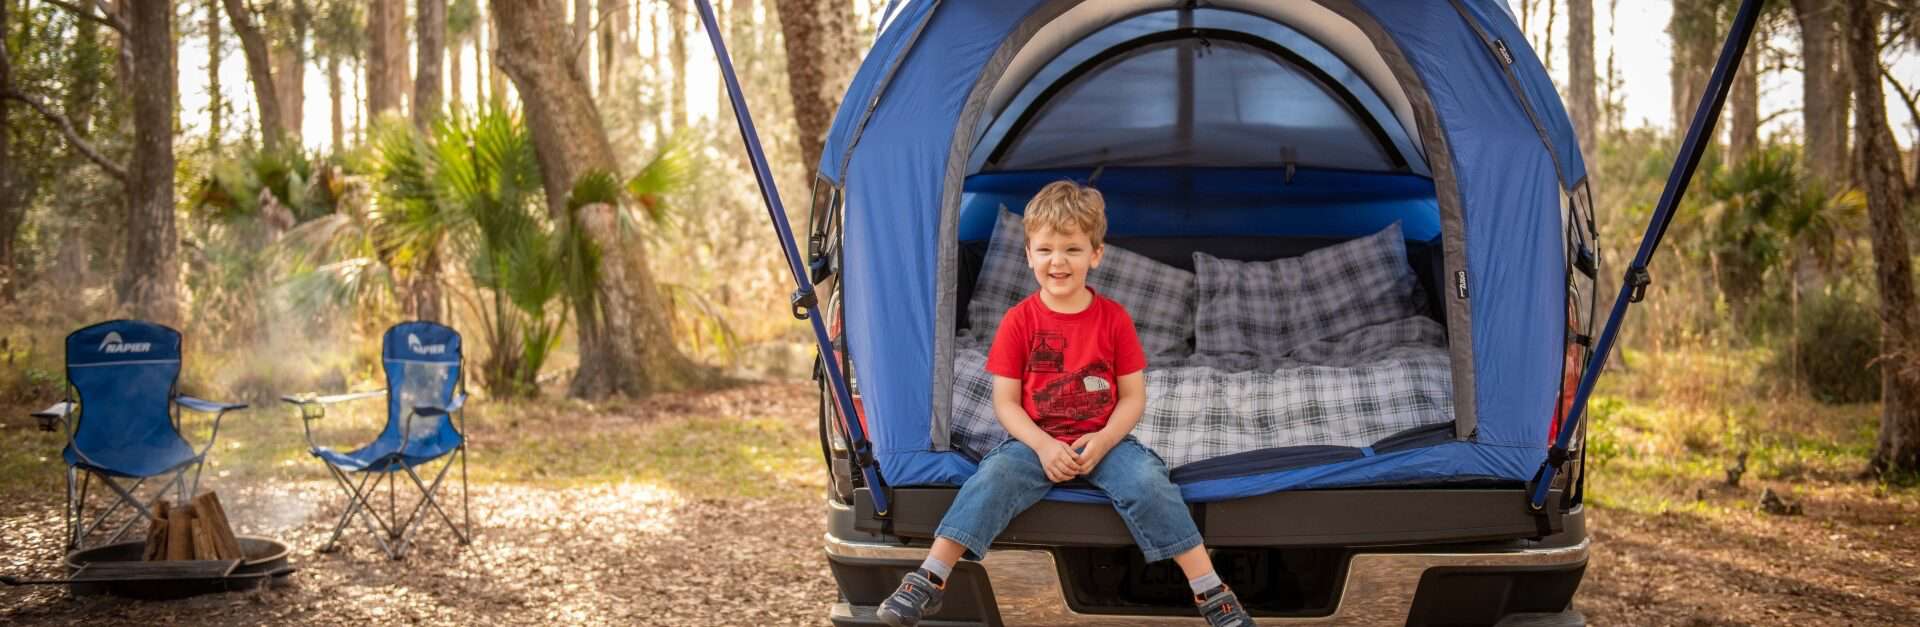 Napier Oudoor Sportz 2 person truck tent - one of the best truck bed tents around